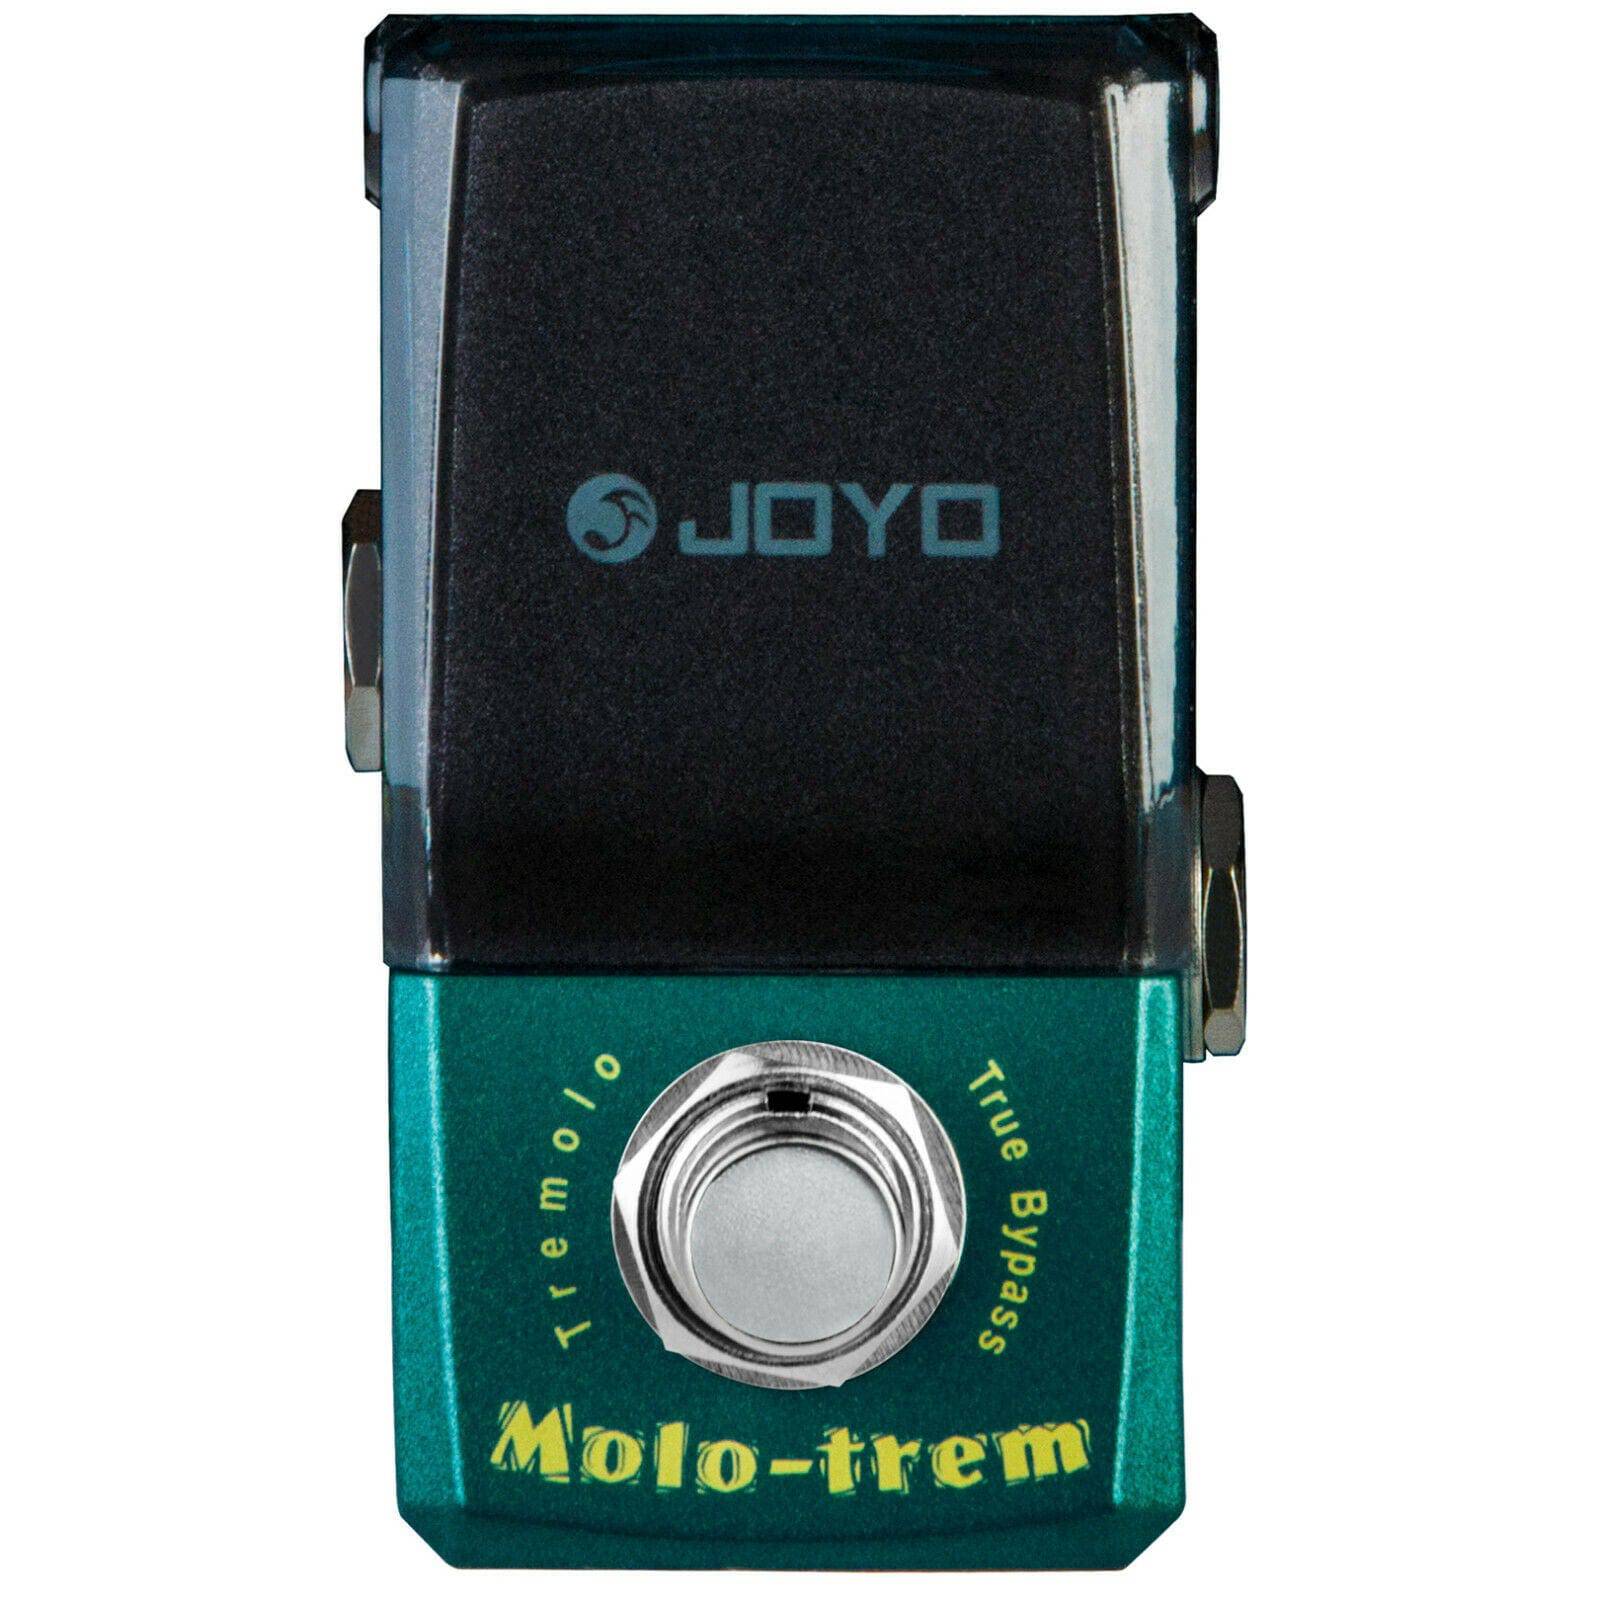 Joyo JF-325 Molo-Term Tremolo Guitar Effects Pedal